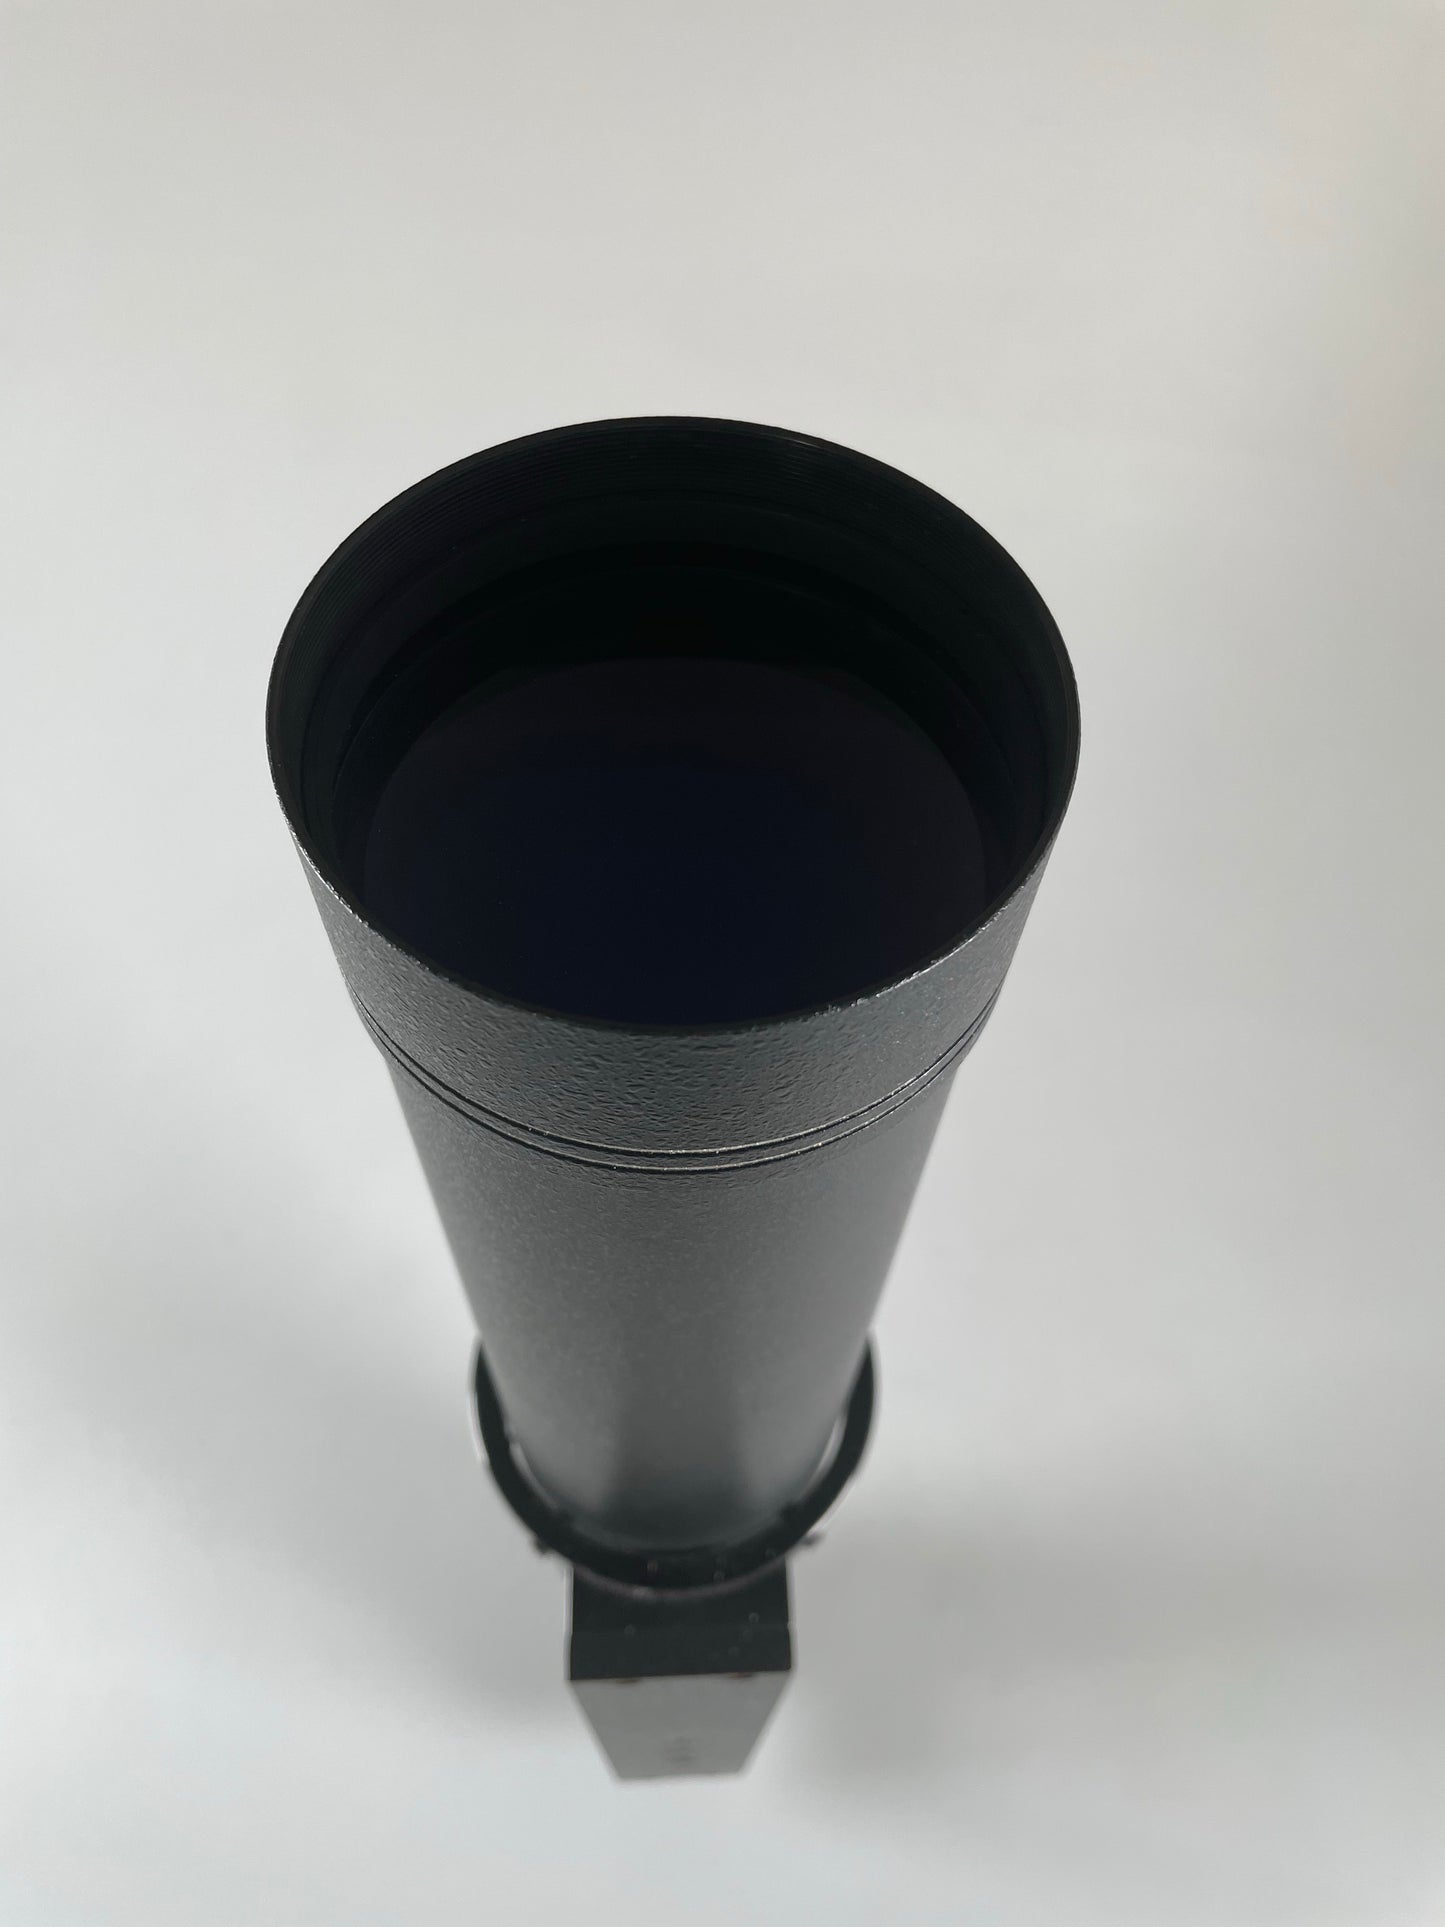 Century 600mm f6.8 Tele-Athenar telephoto lens RARE